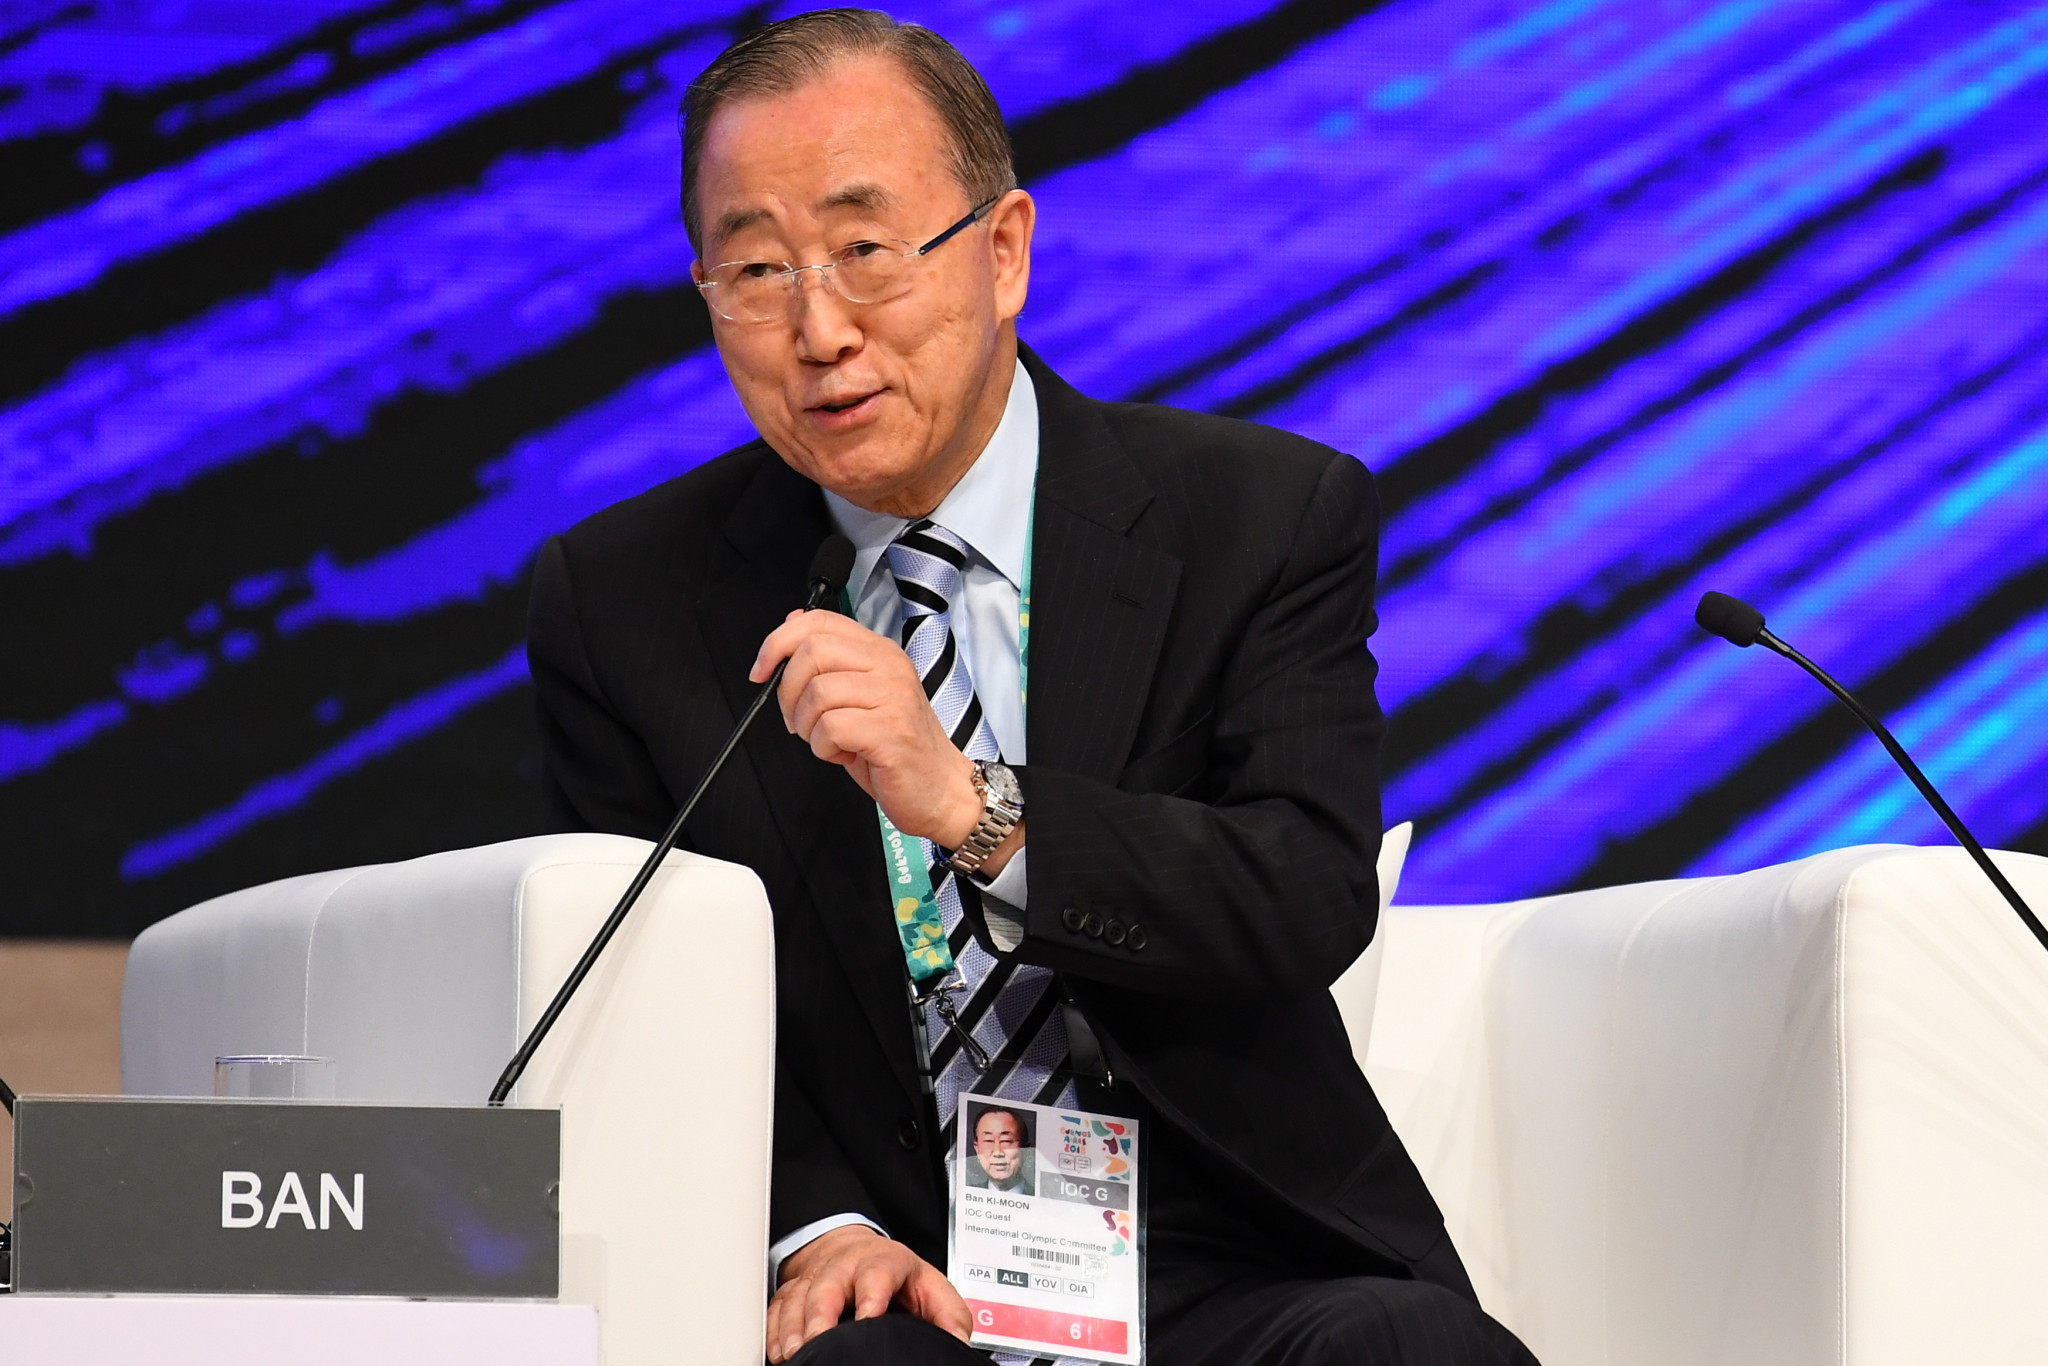 IOC Ethics Commission chair Ban Ki-moon argued 